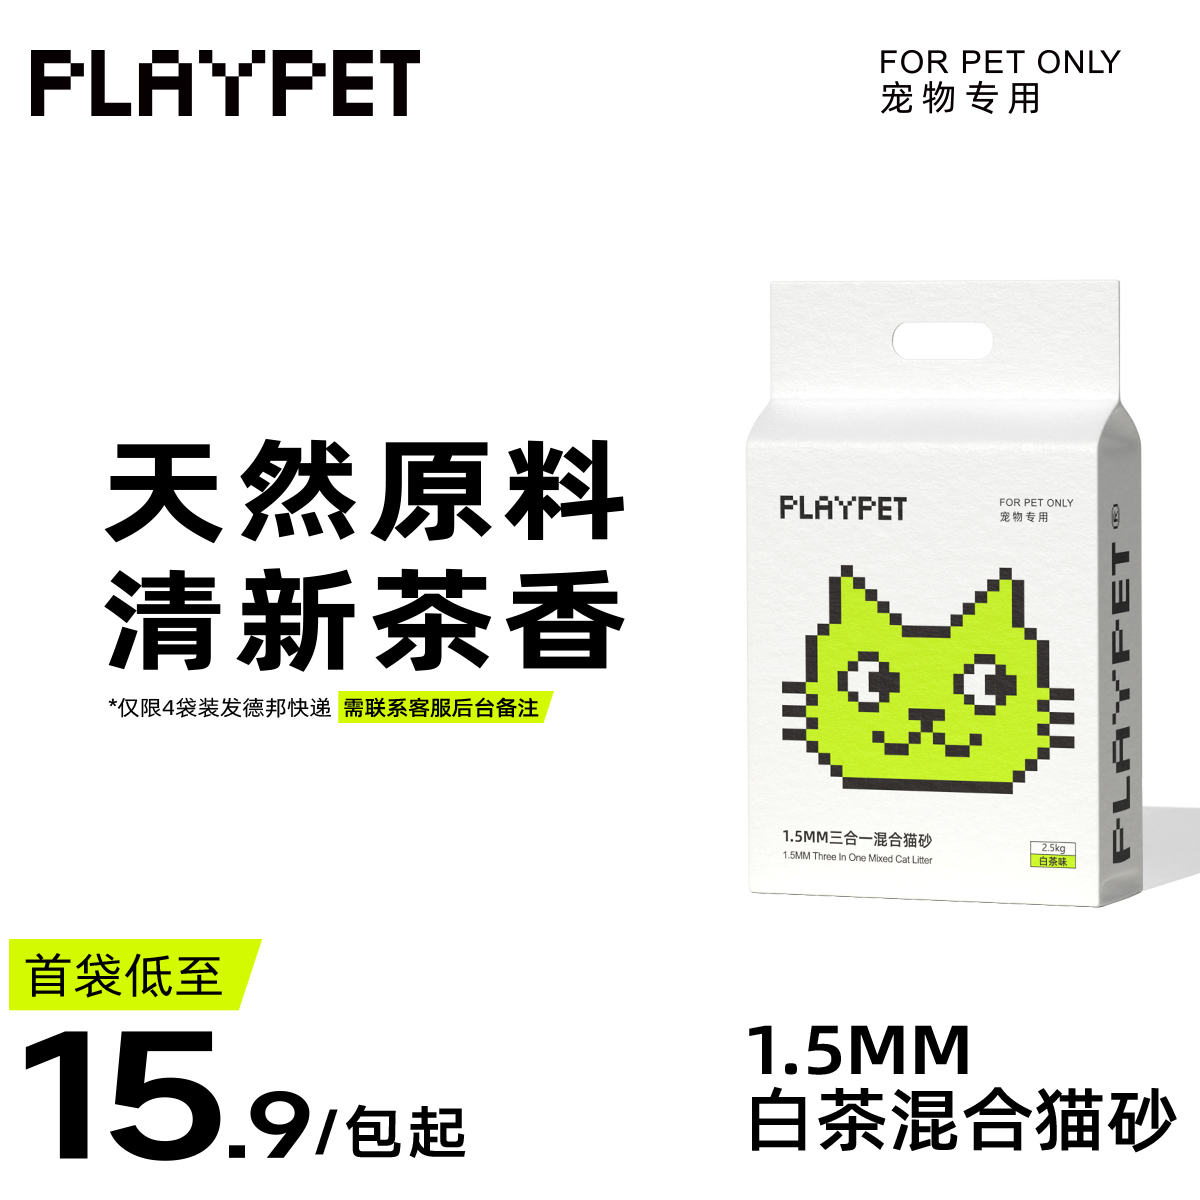 PLAYPET白茶味1.5MM混合猫砂可冲马桶真空包装豆腐膨润土秒速结团